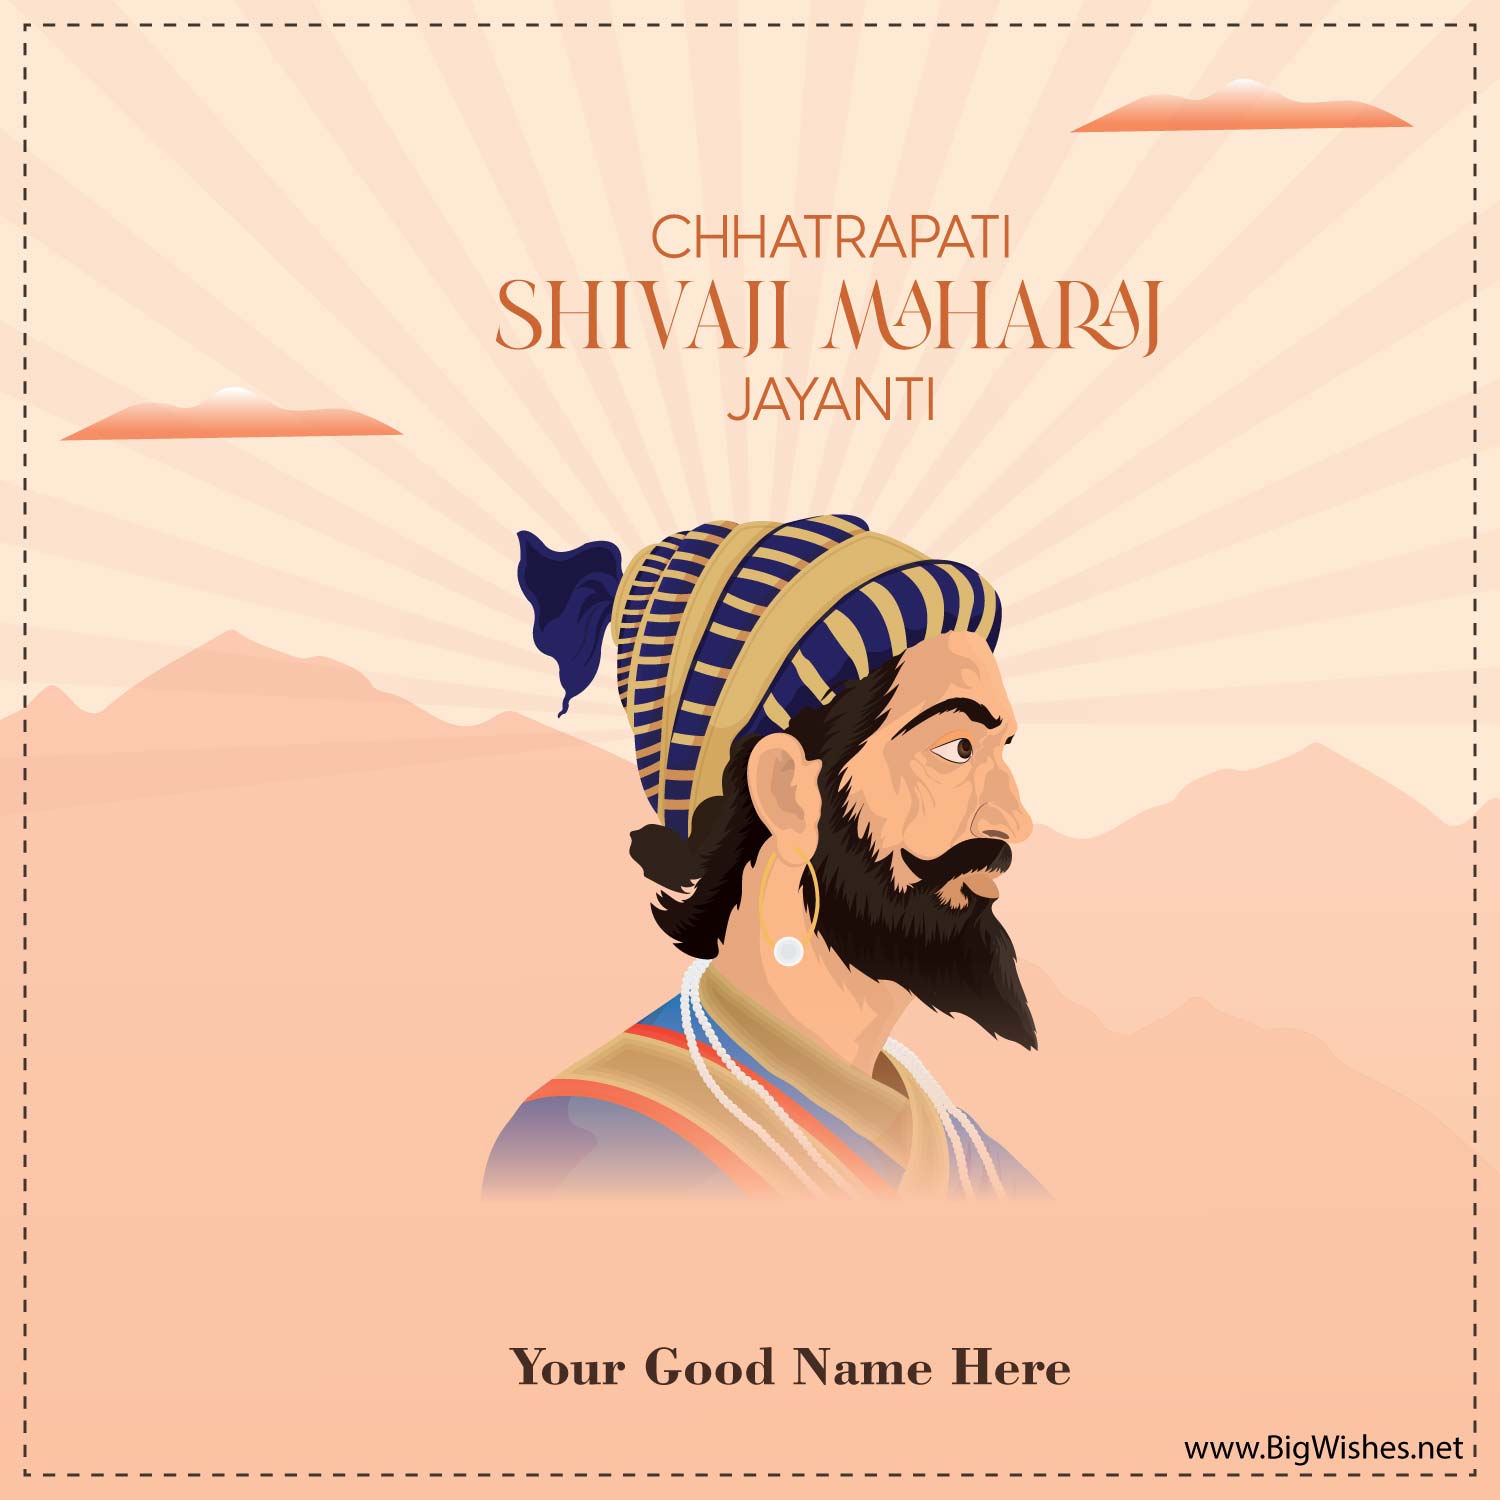 Shivaji Maharaj Jayanti Wishes Quotes Images with Name Edit